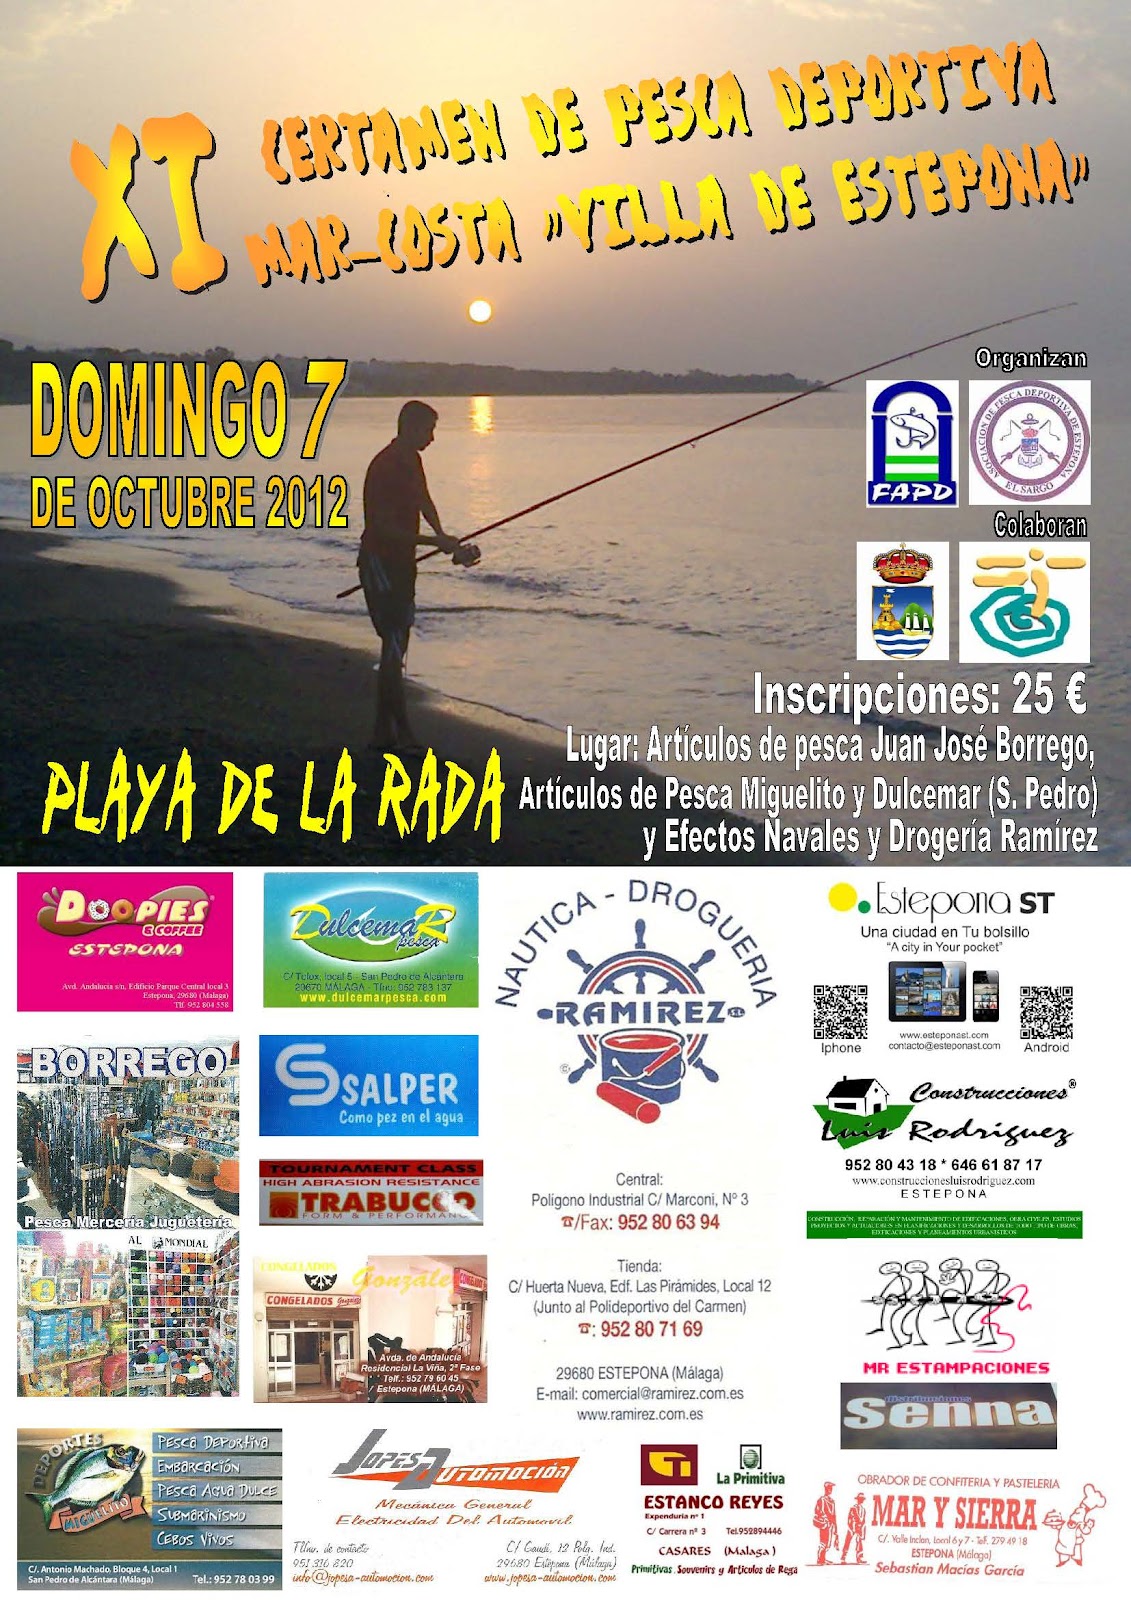 Estepona acogerá el domingo el XI certamen de pesca deportiva Mar Costa "Villa de Estepona" 